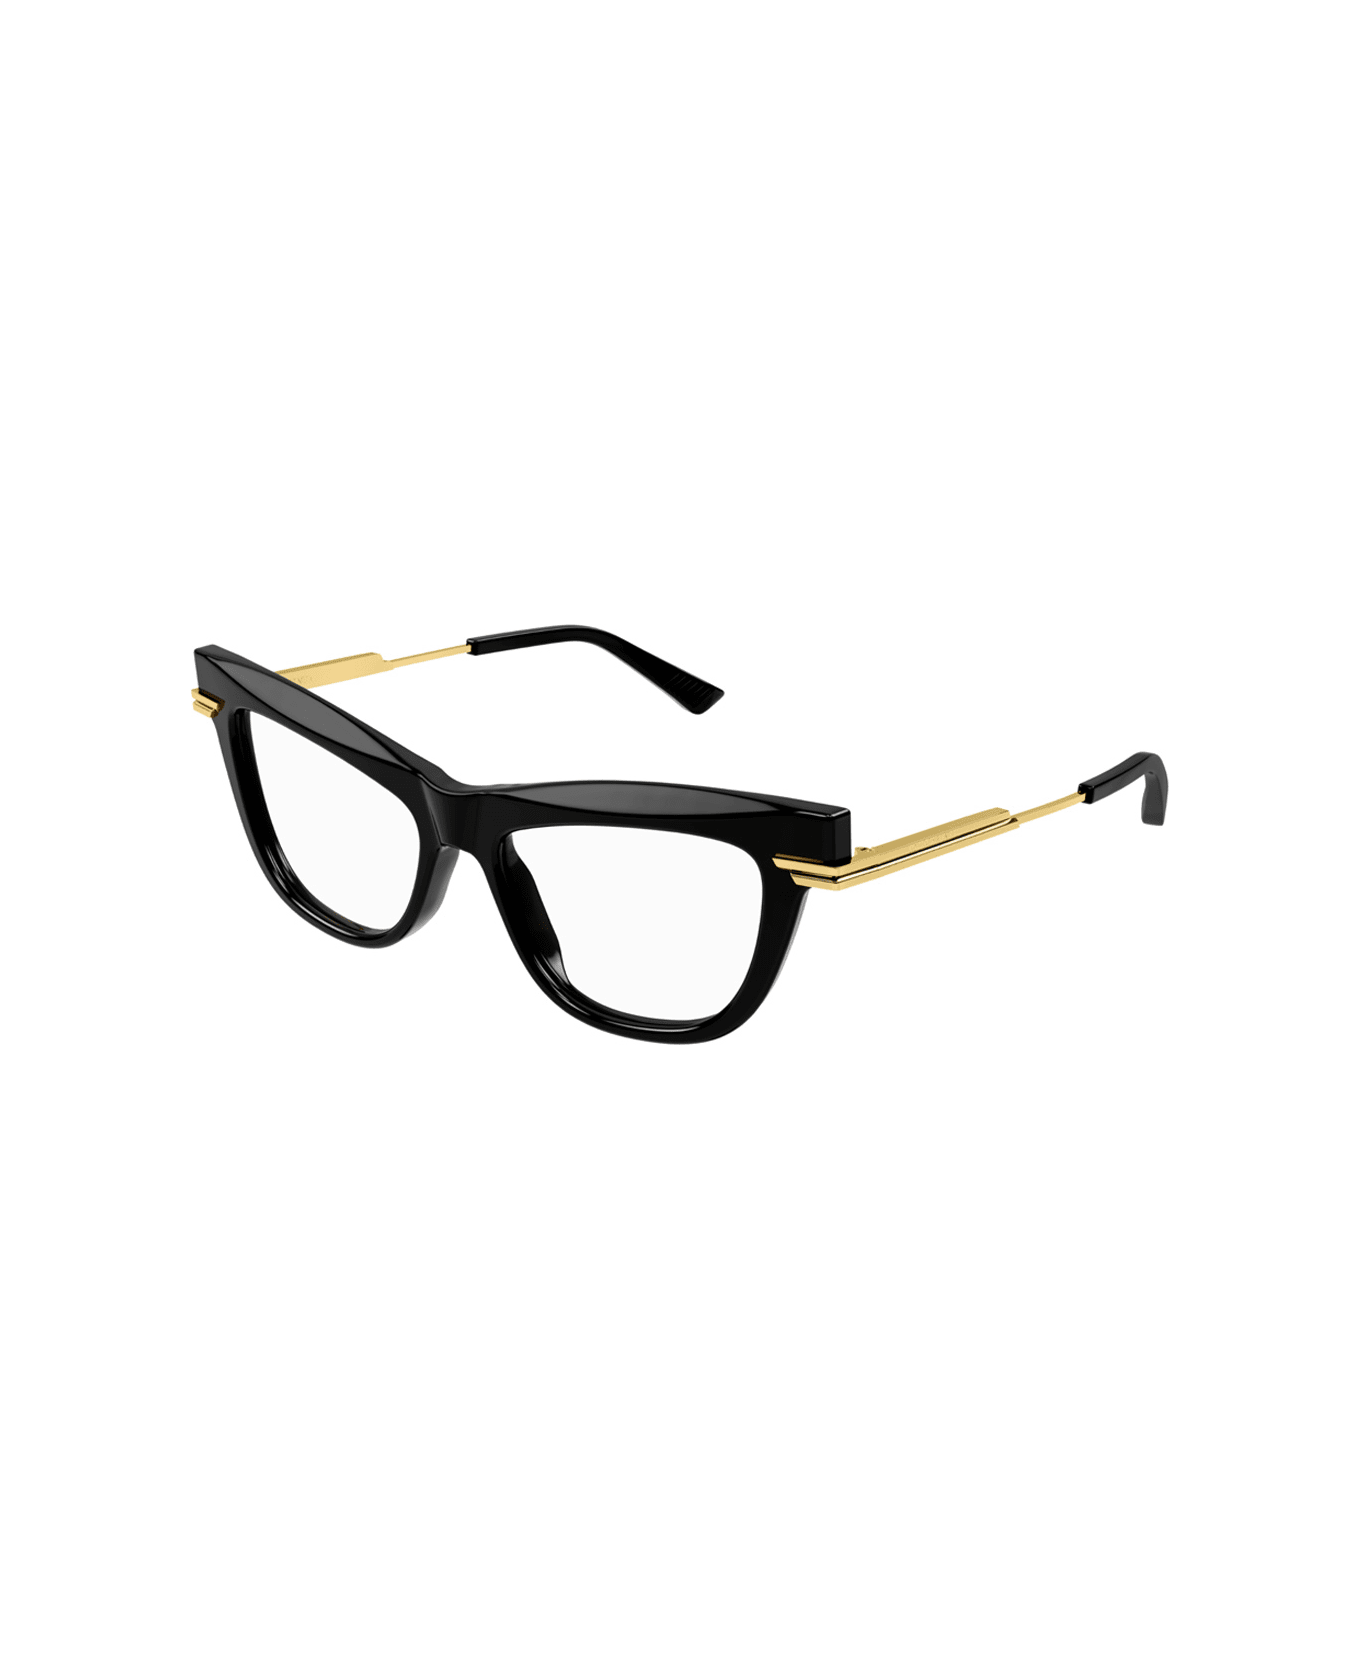 Bottega Veneta Eyewear Bv1266o Linea Minimalist 001 Glasses - Nero アイウェア